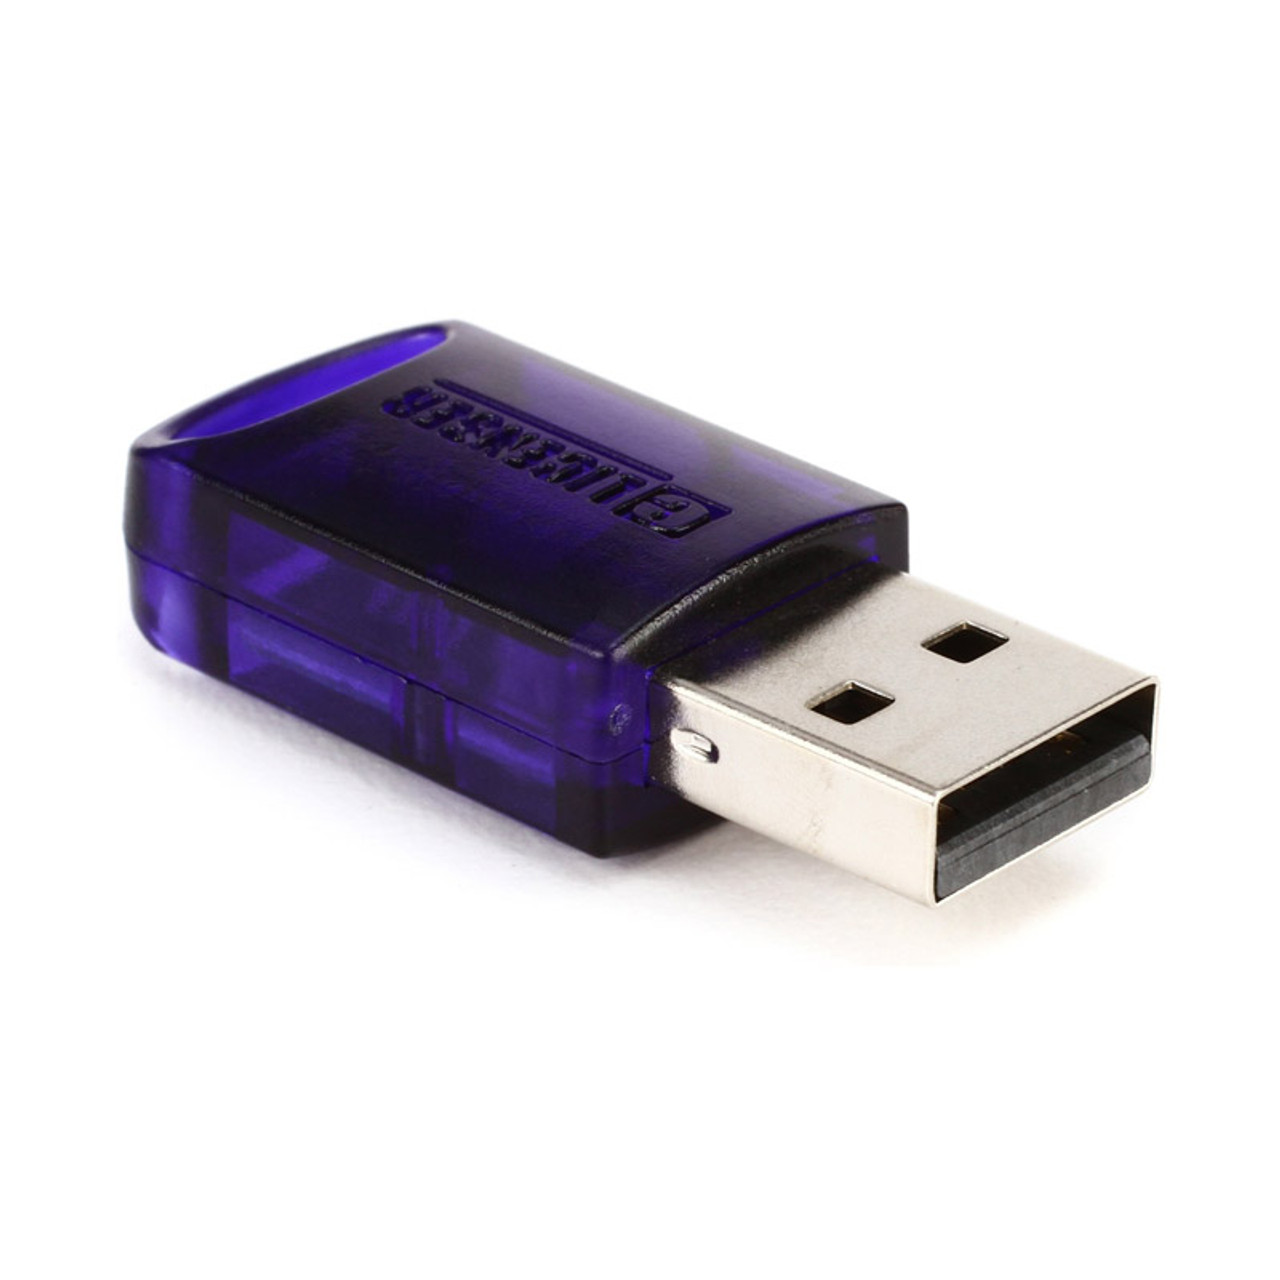 Steinberg Key (USB -eLicenser)